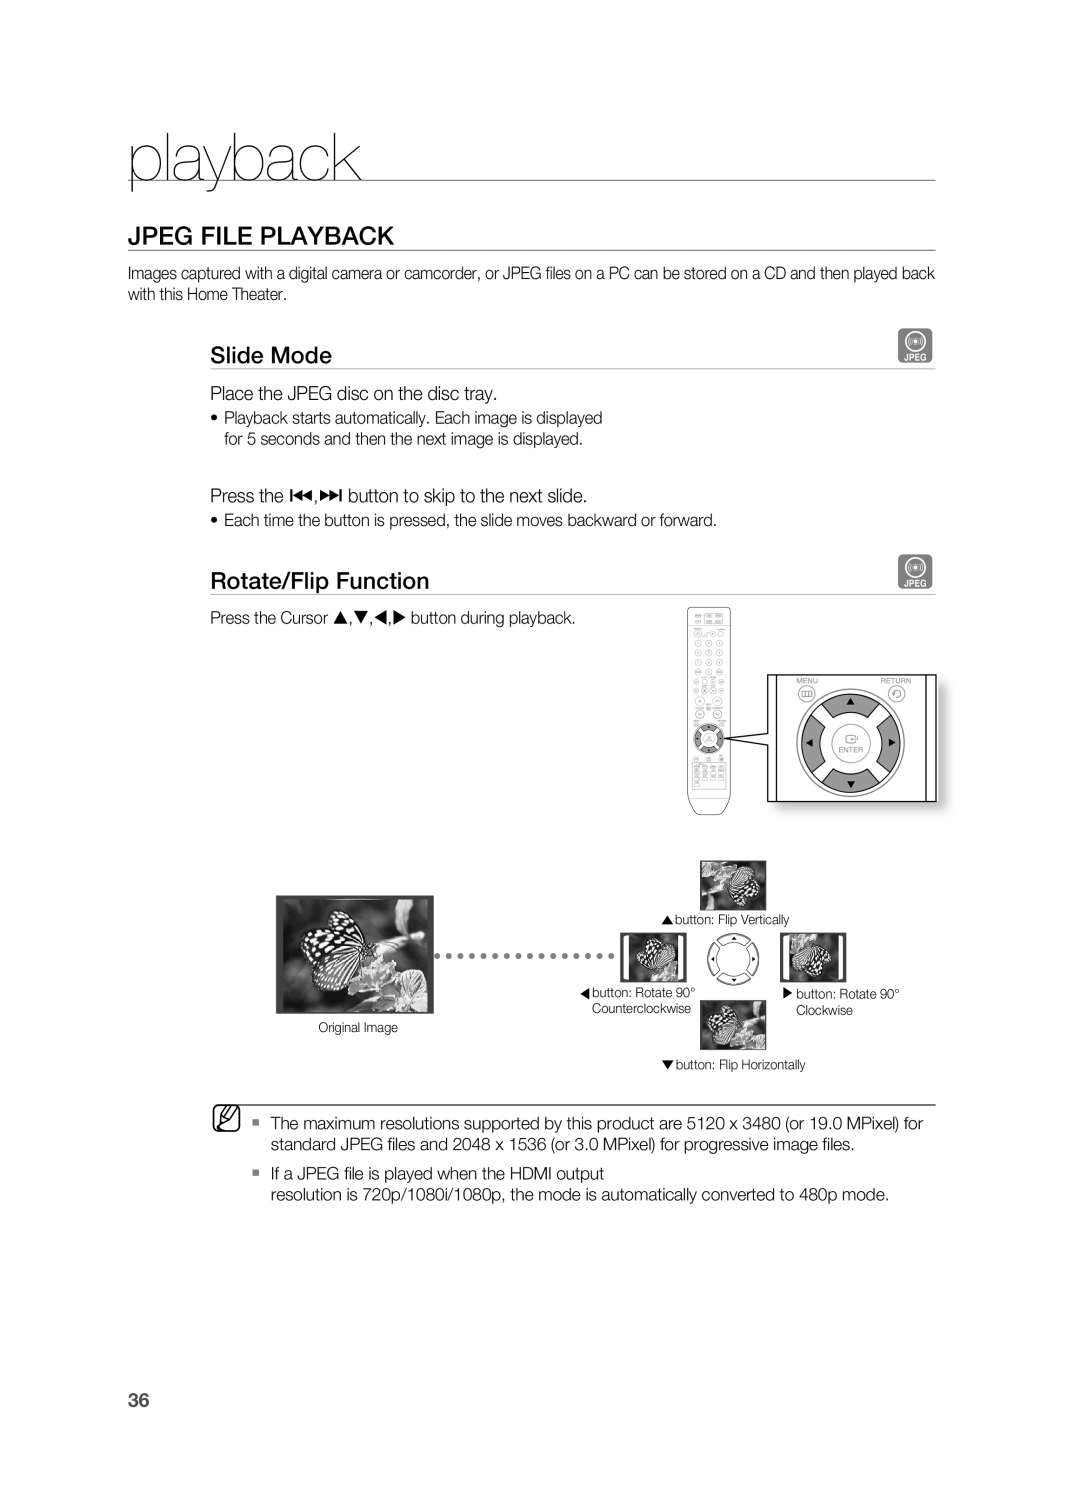 Samsung HT-TZ312 manual JPEG fiLE PLayBaCK, Slide mode, rotate/flip function, playback 